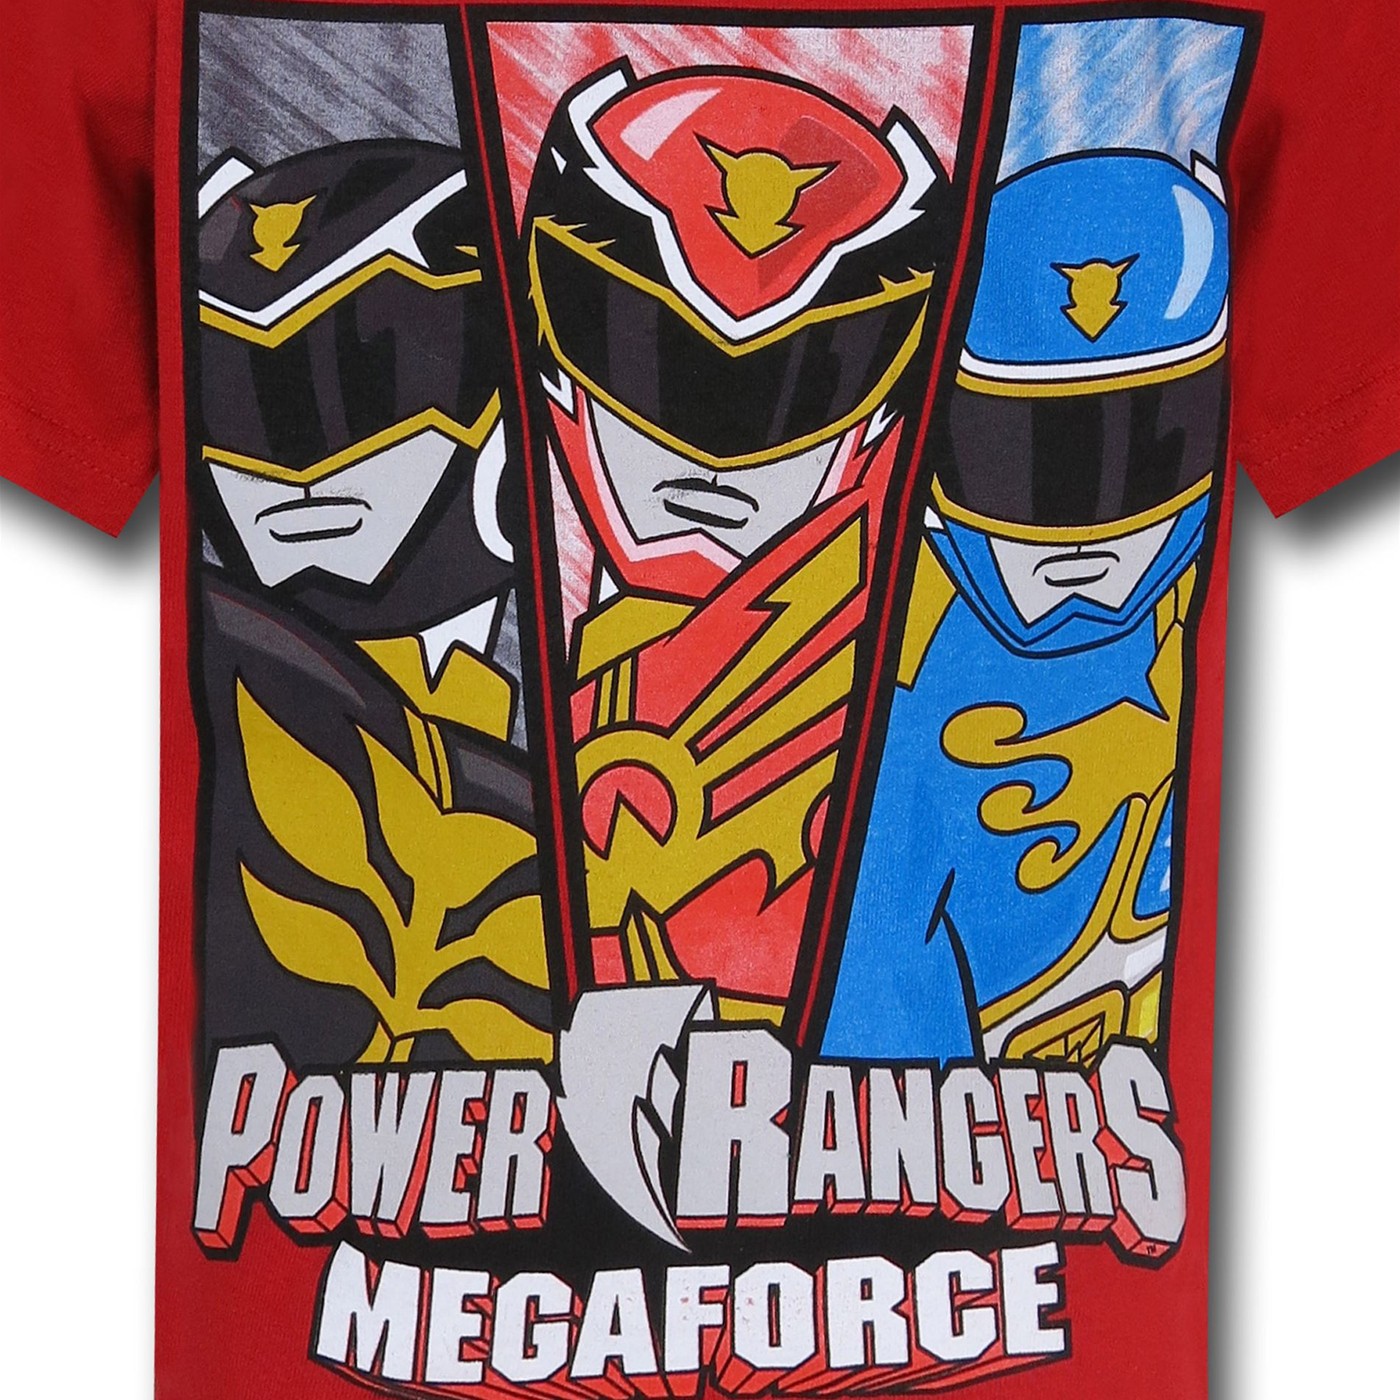 Power Rangers MegaForce Kids Red T-Shirt